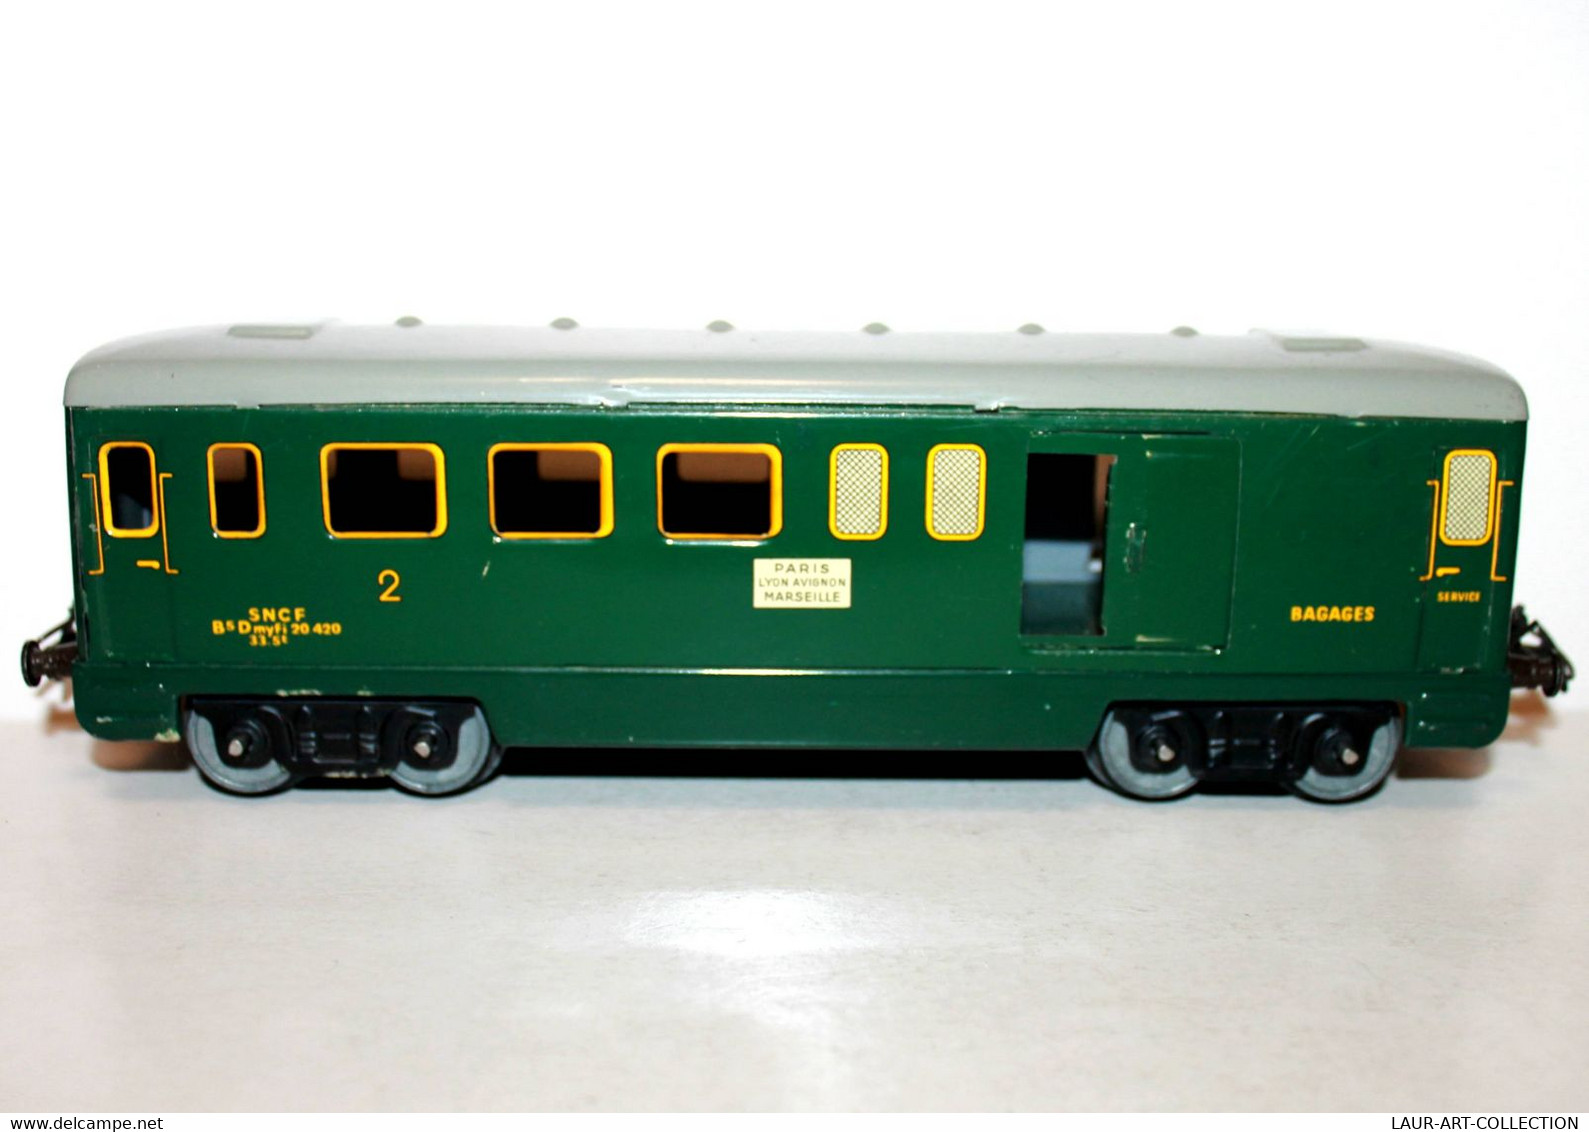 HORNBY, VOITURE WAGON BAGAGES SNCF B5Dmyfi 20.420 PARIS MARSEILLE A BOGIES ECH:O - MODELISME FERROVIAIRE (1712.43) - Güterwaggons